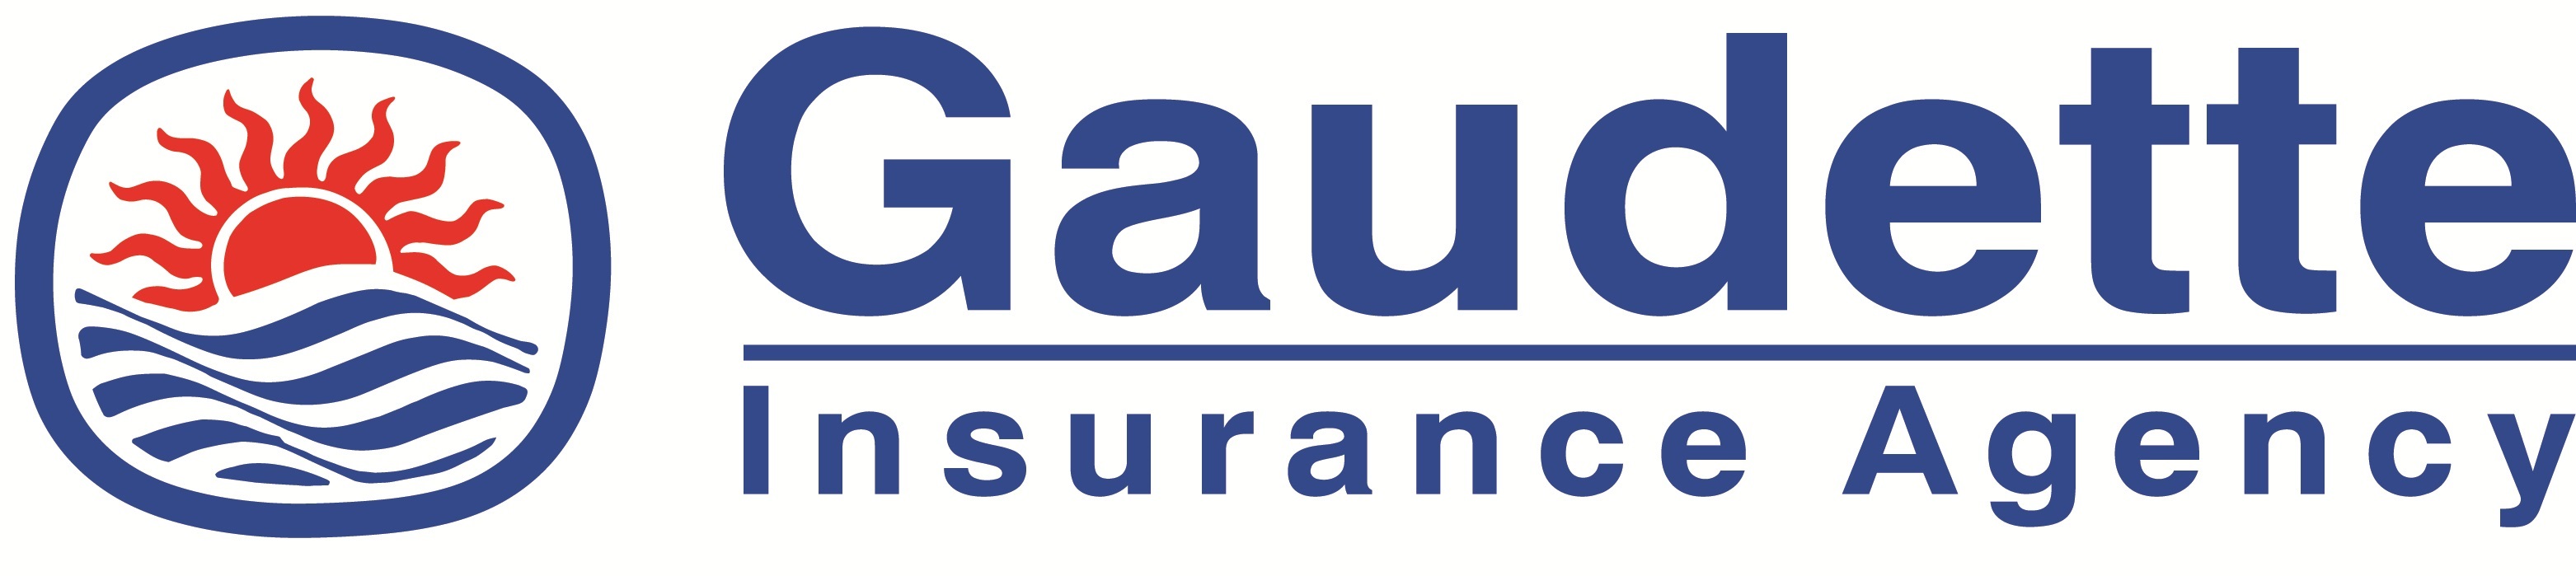 Visit http://www.gaudette-insurance.com/